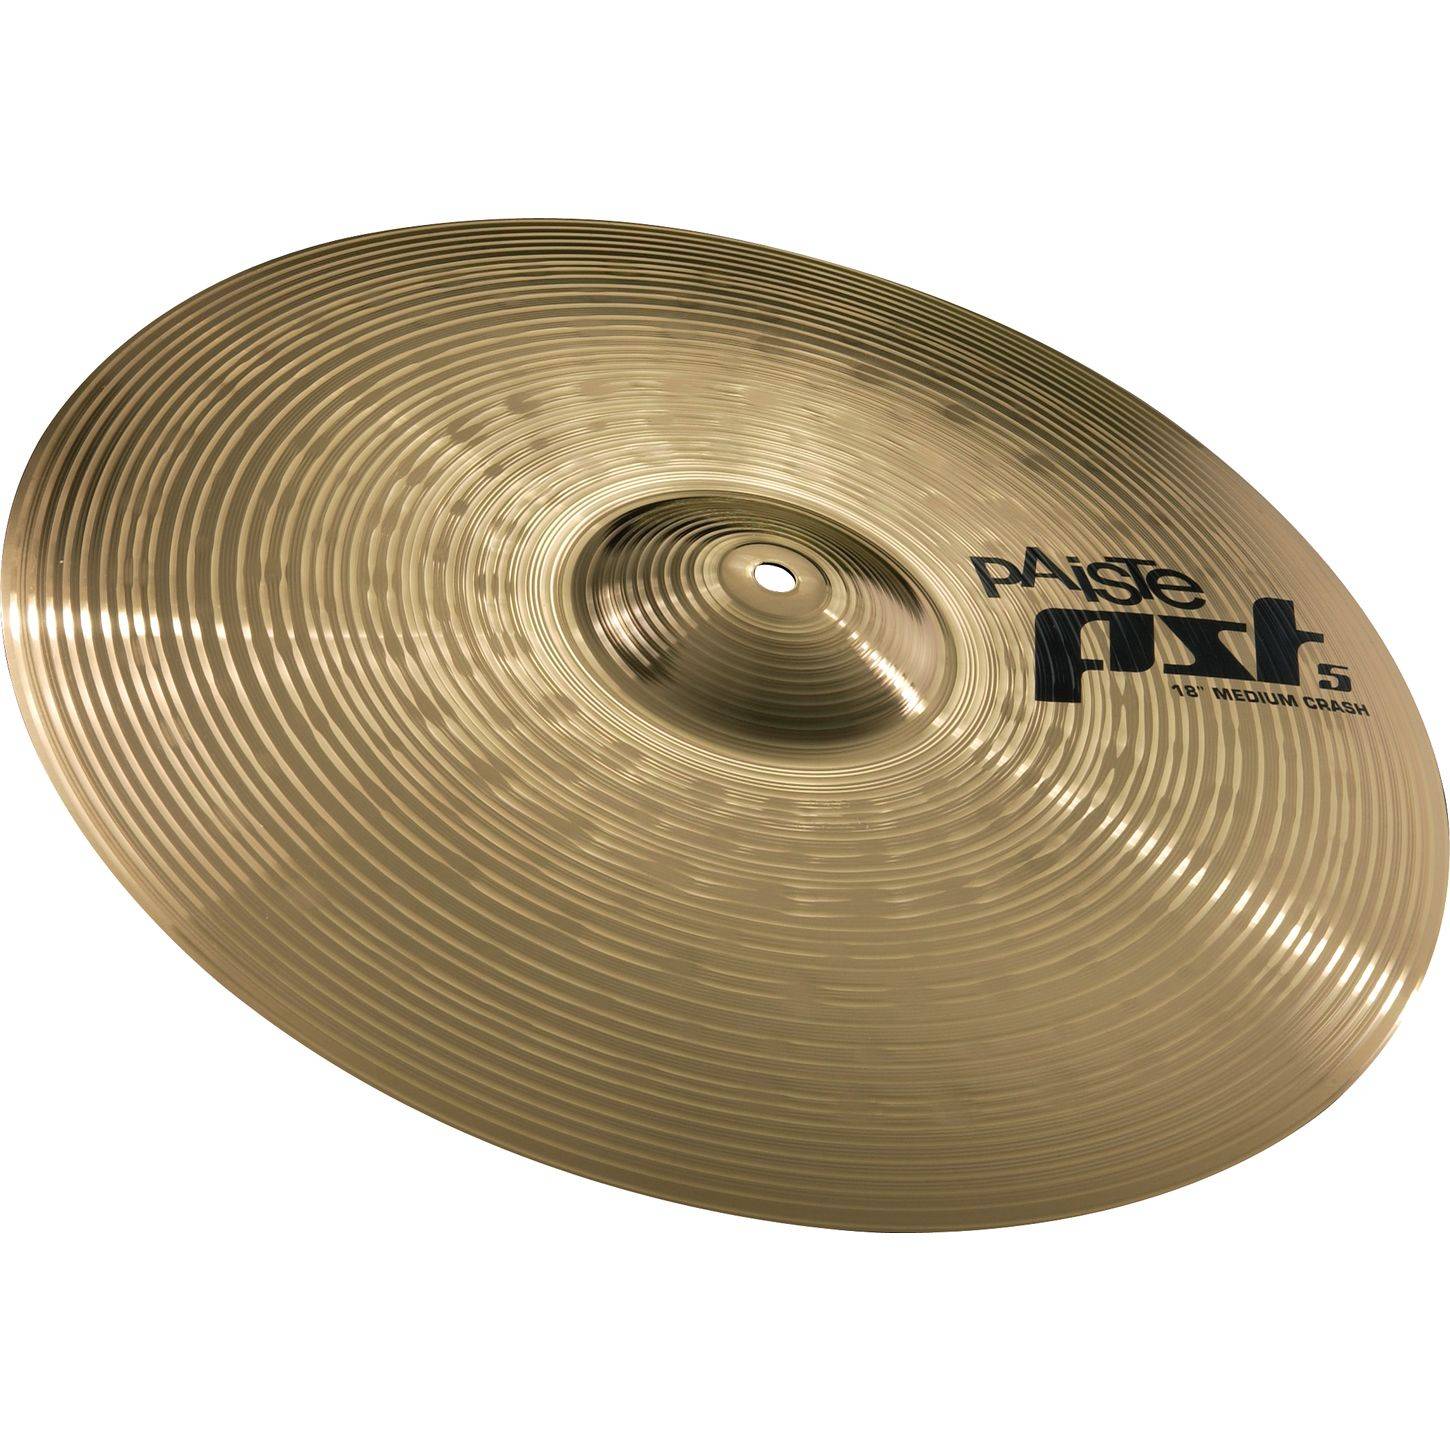 PAISTE PST 5 16'' Medium Crash (2014) Cymbal